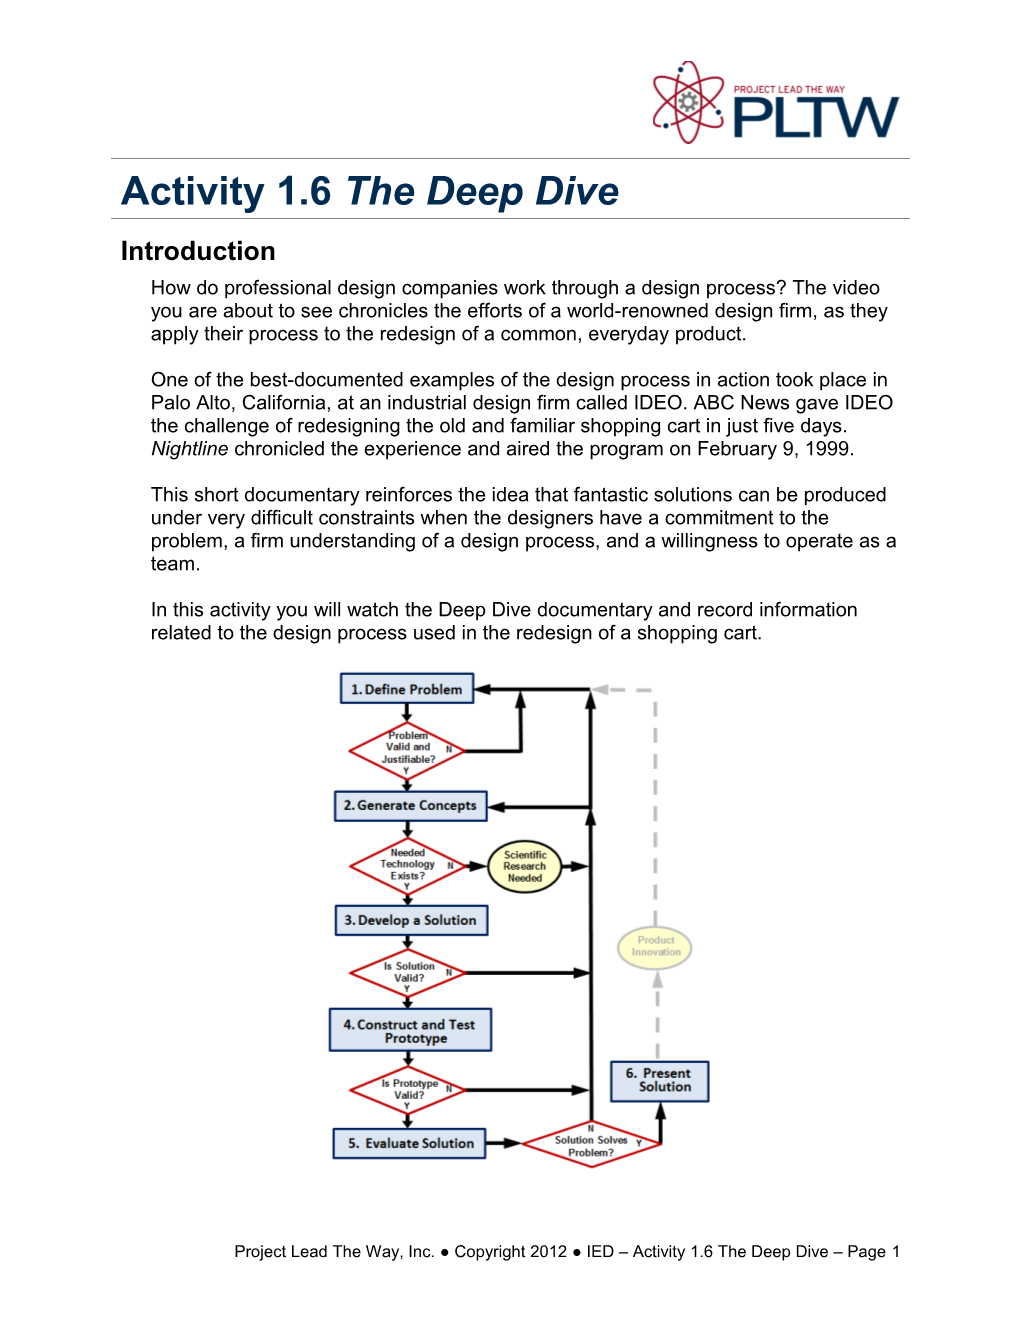 Activity 1.6 the Deep Dive